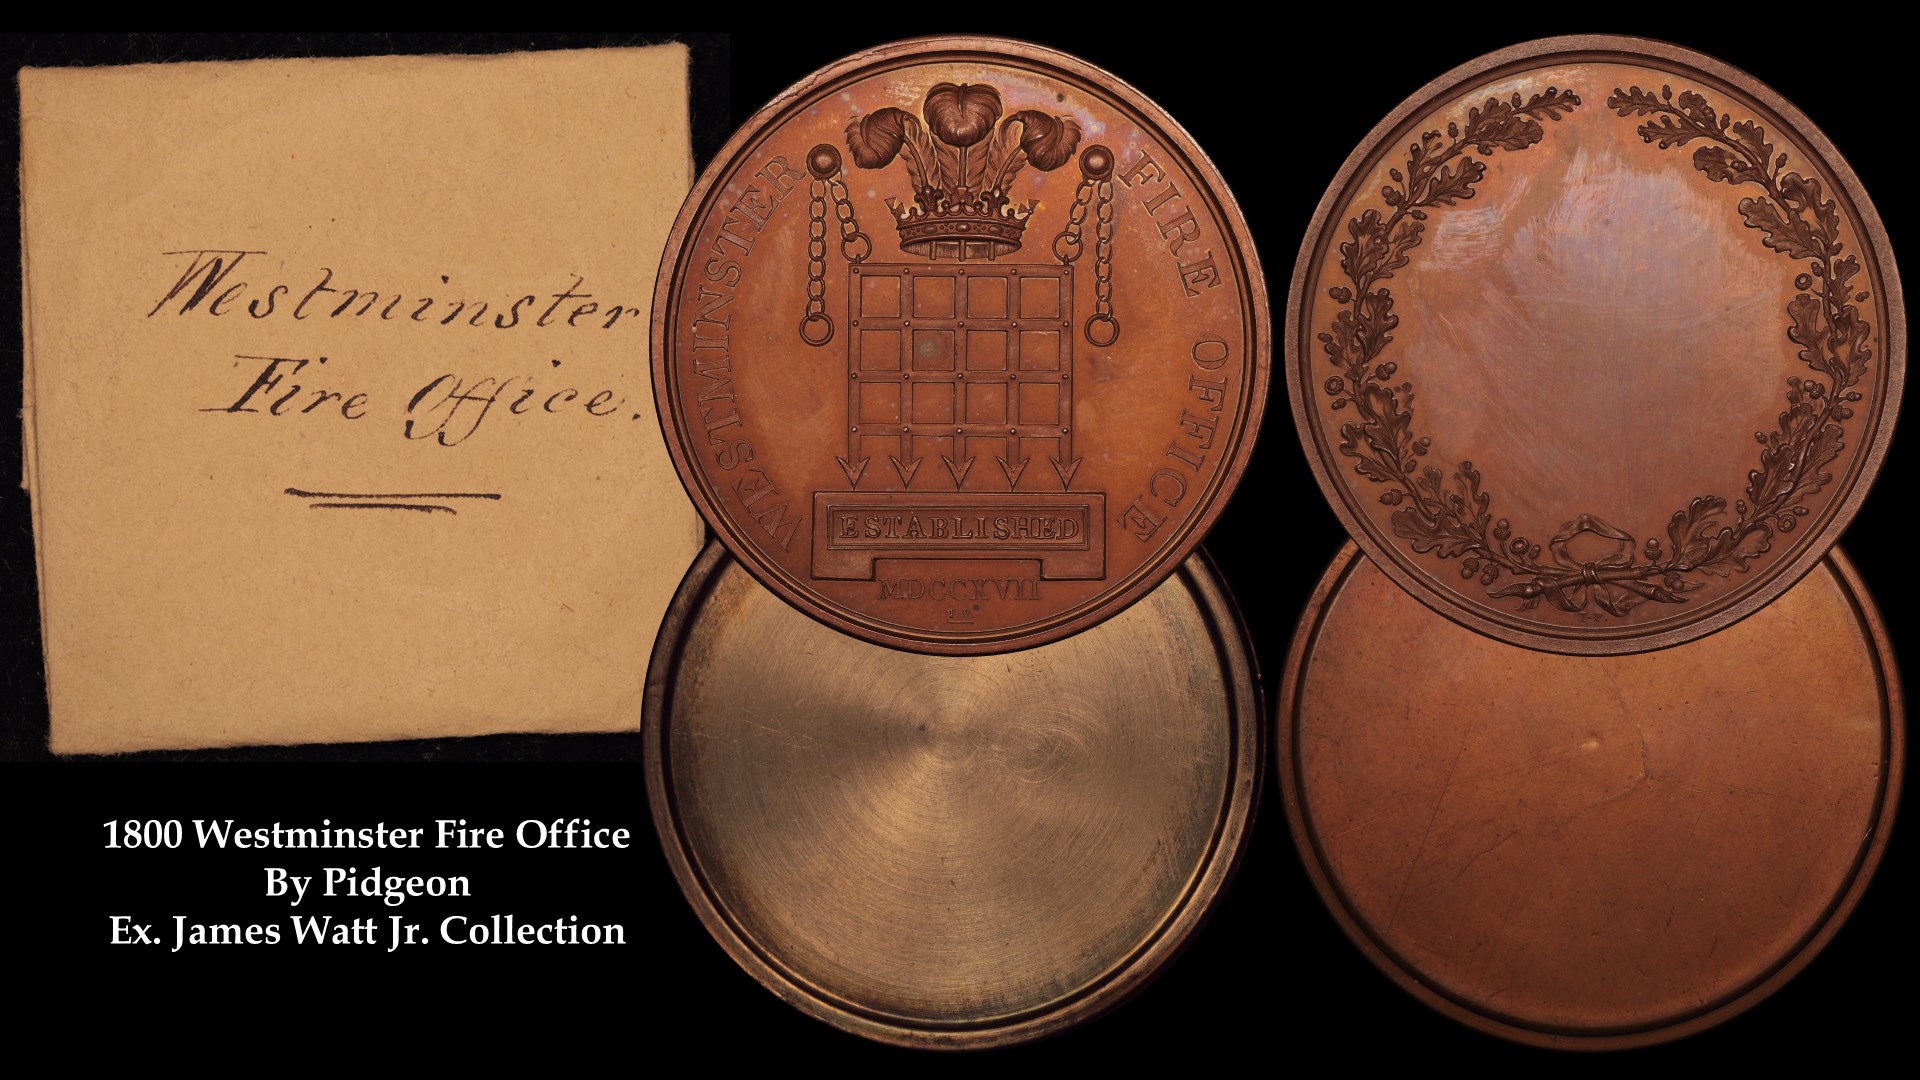 1800 Westminster Fire Office Medal With Wrapper and Shells Ex. James Watt Jr. Lot 265 40mm.jpg